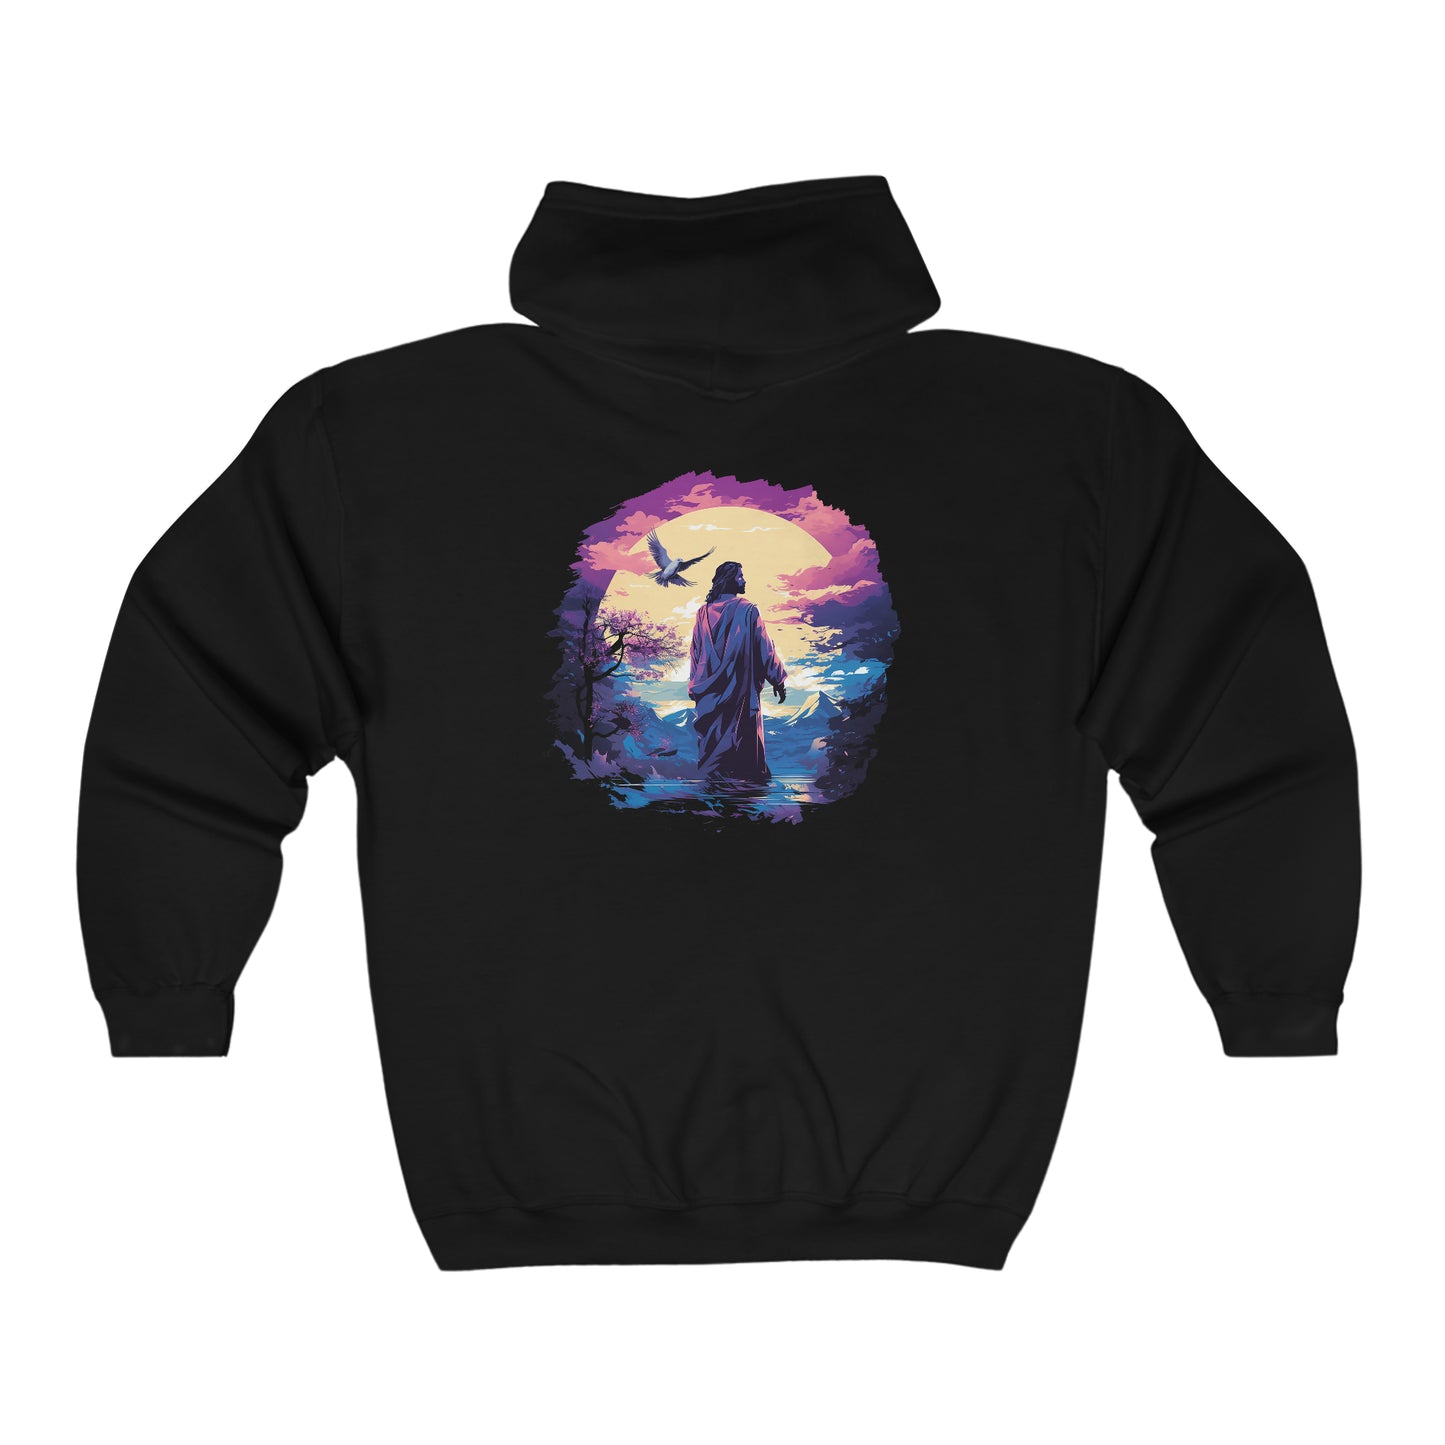 Christian Hooded Sweatshirt - Jesus and The Holy Spirit - Unisex Full Zip